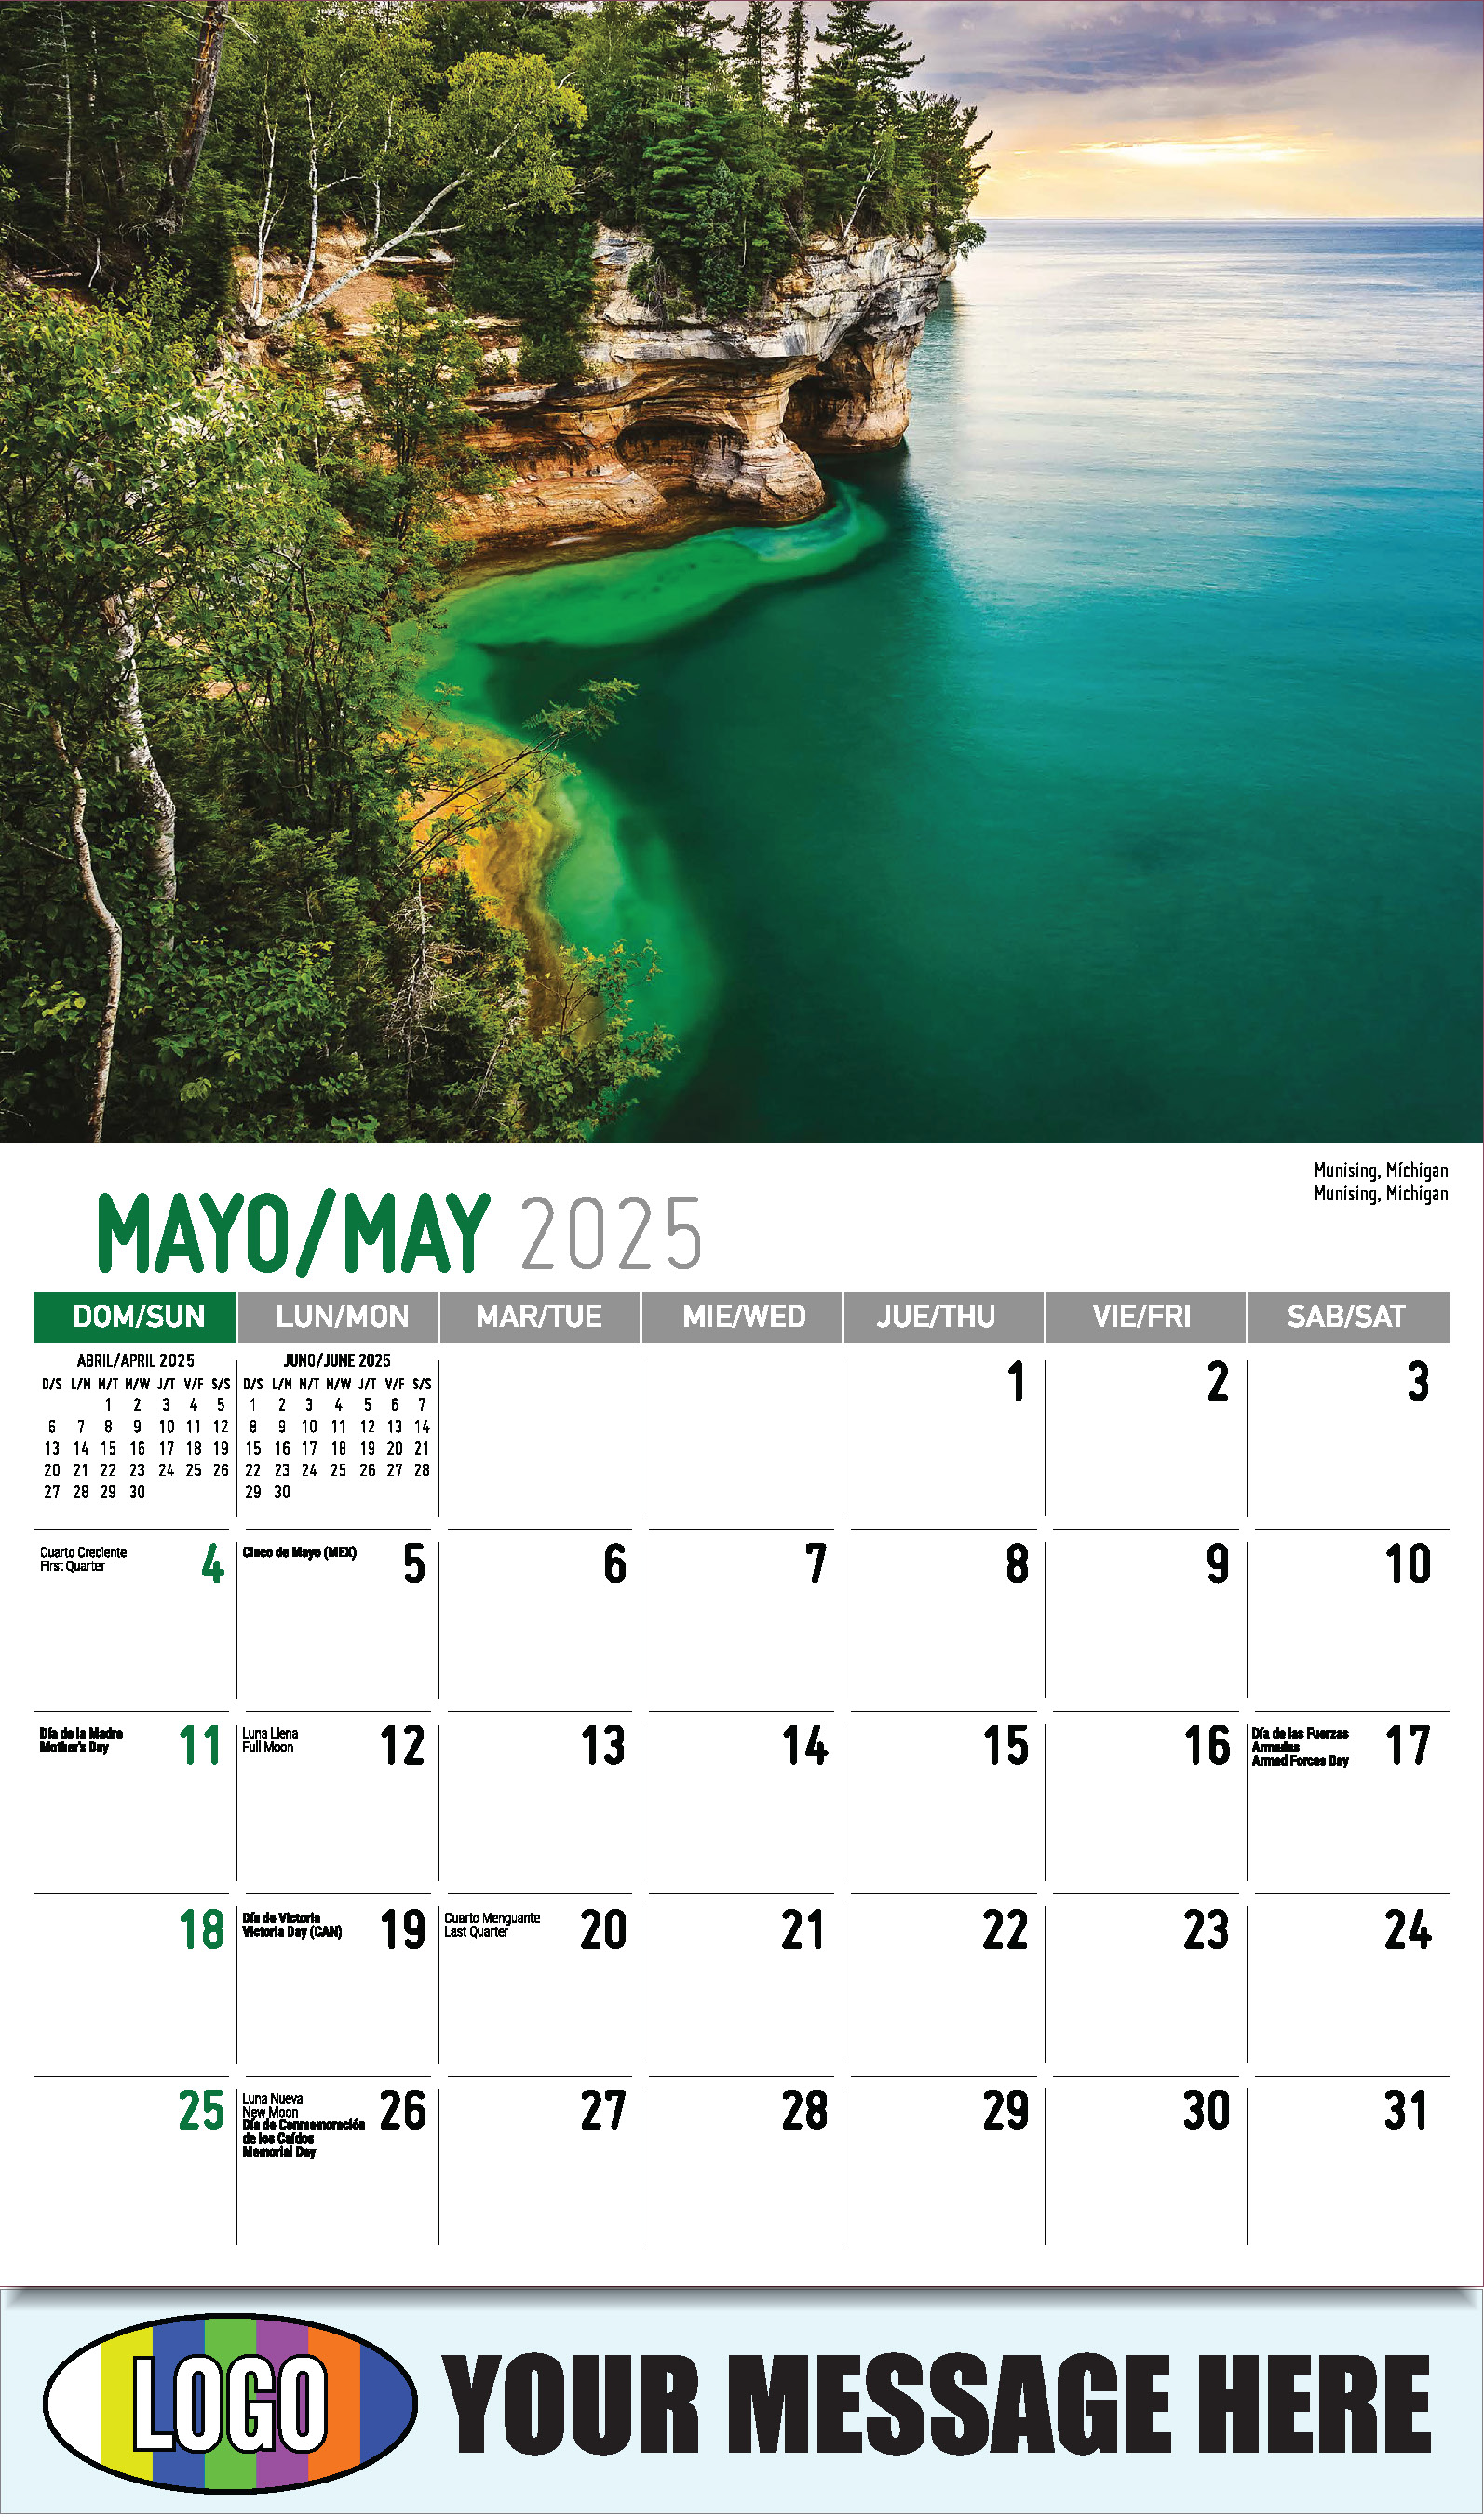 Scenes of America 2025 Bilingual Business Promo Calendar - May